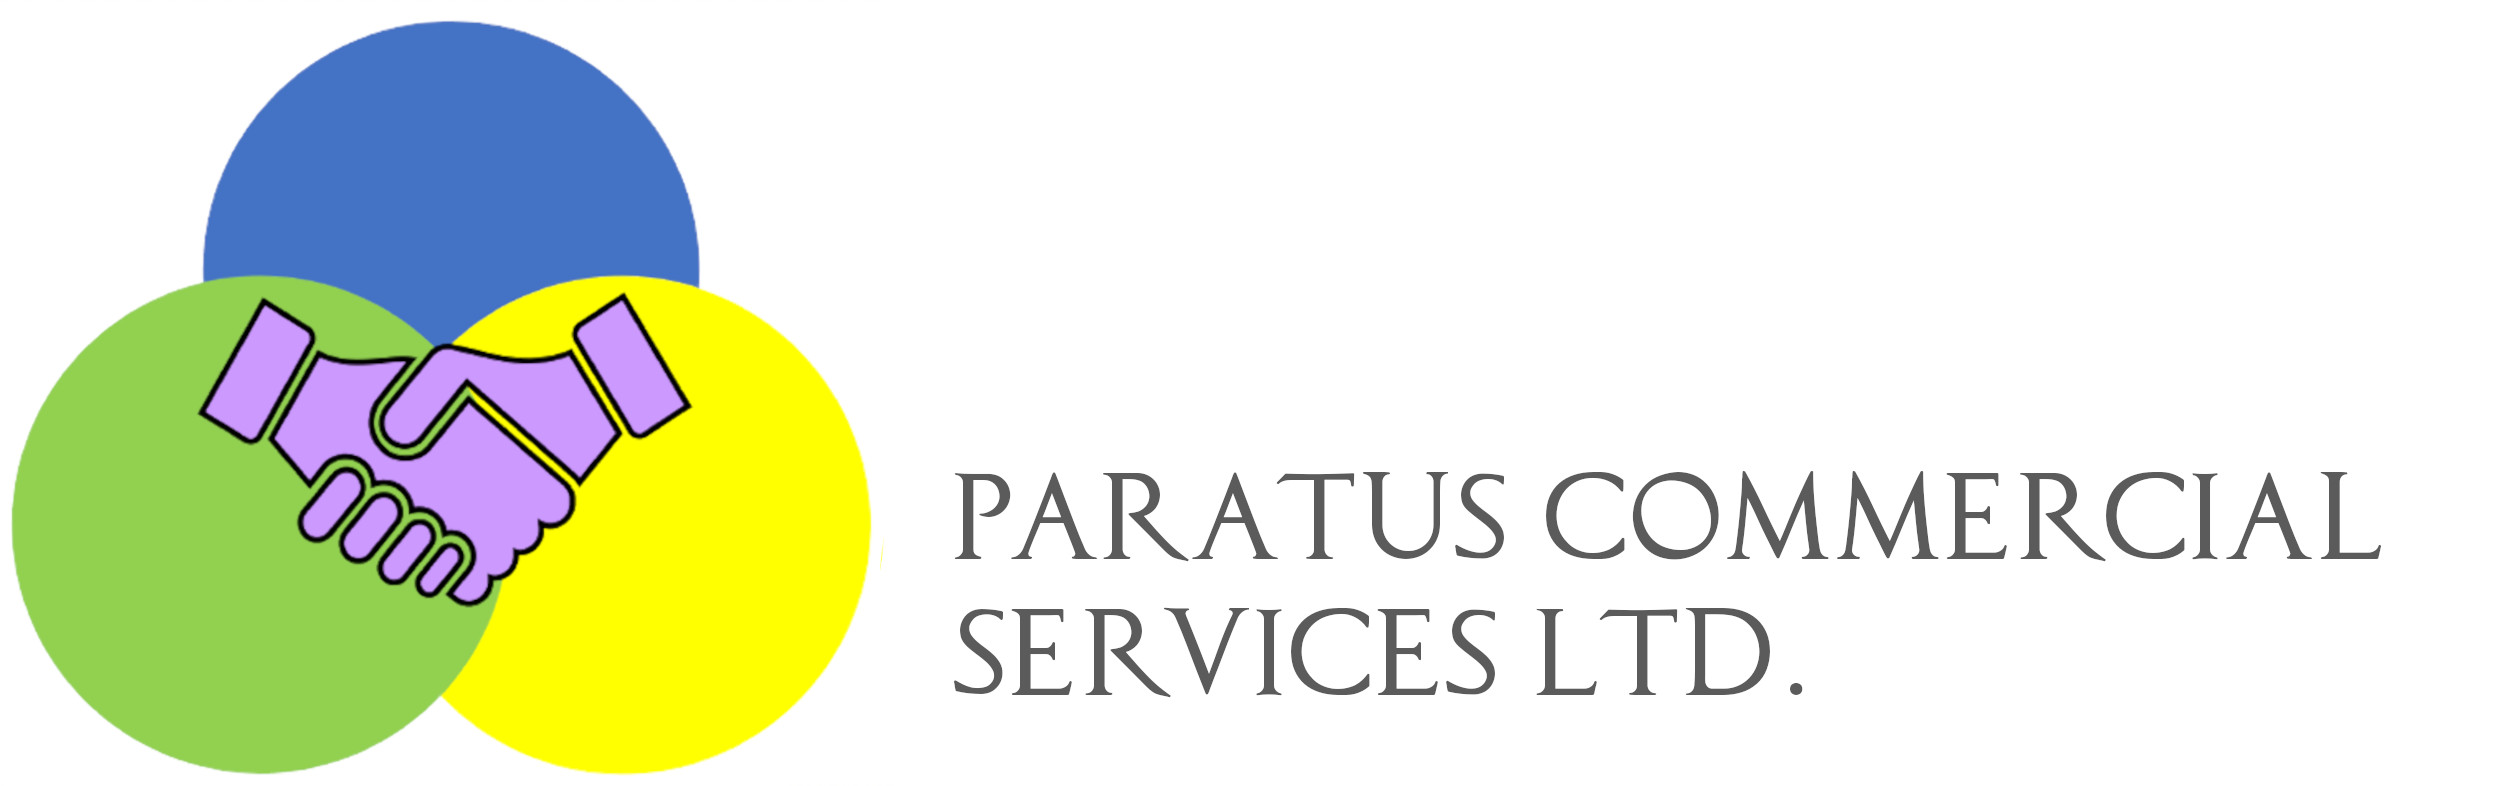 Paratus Logo 2.1d